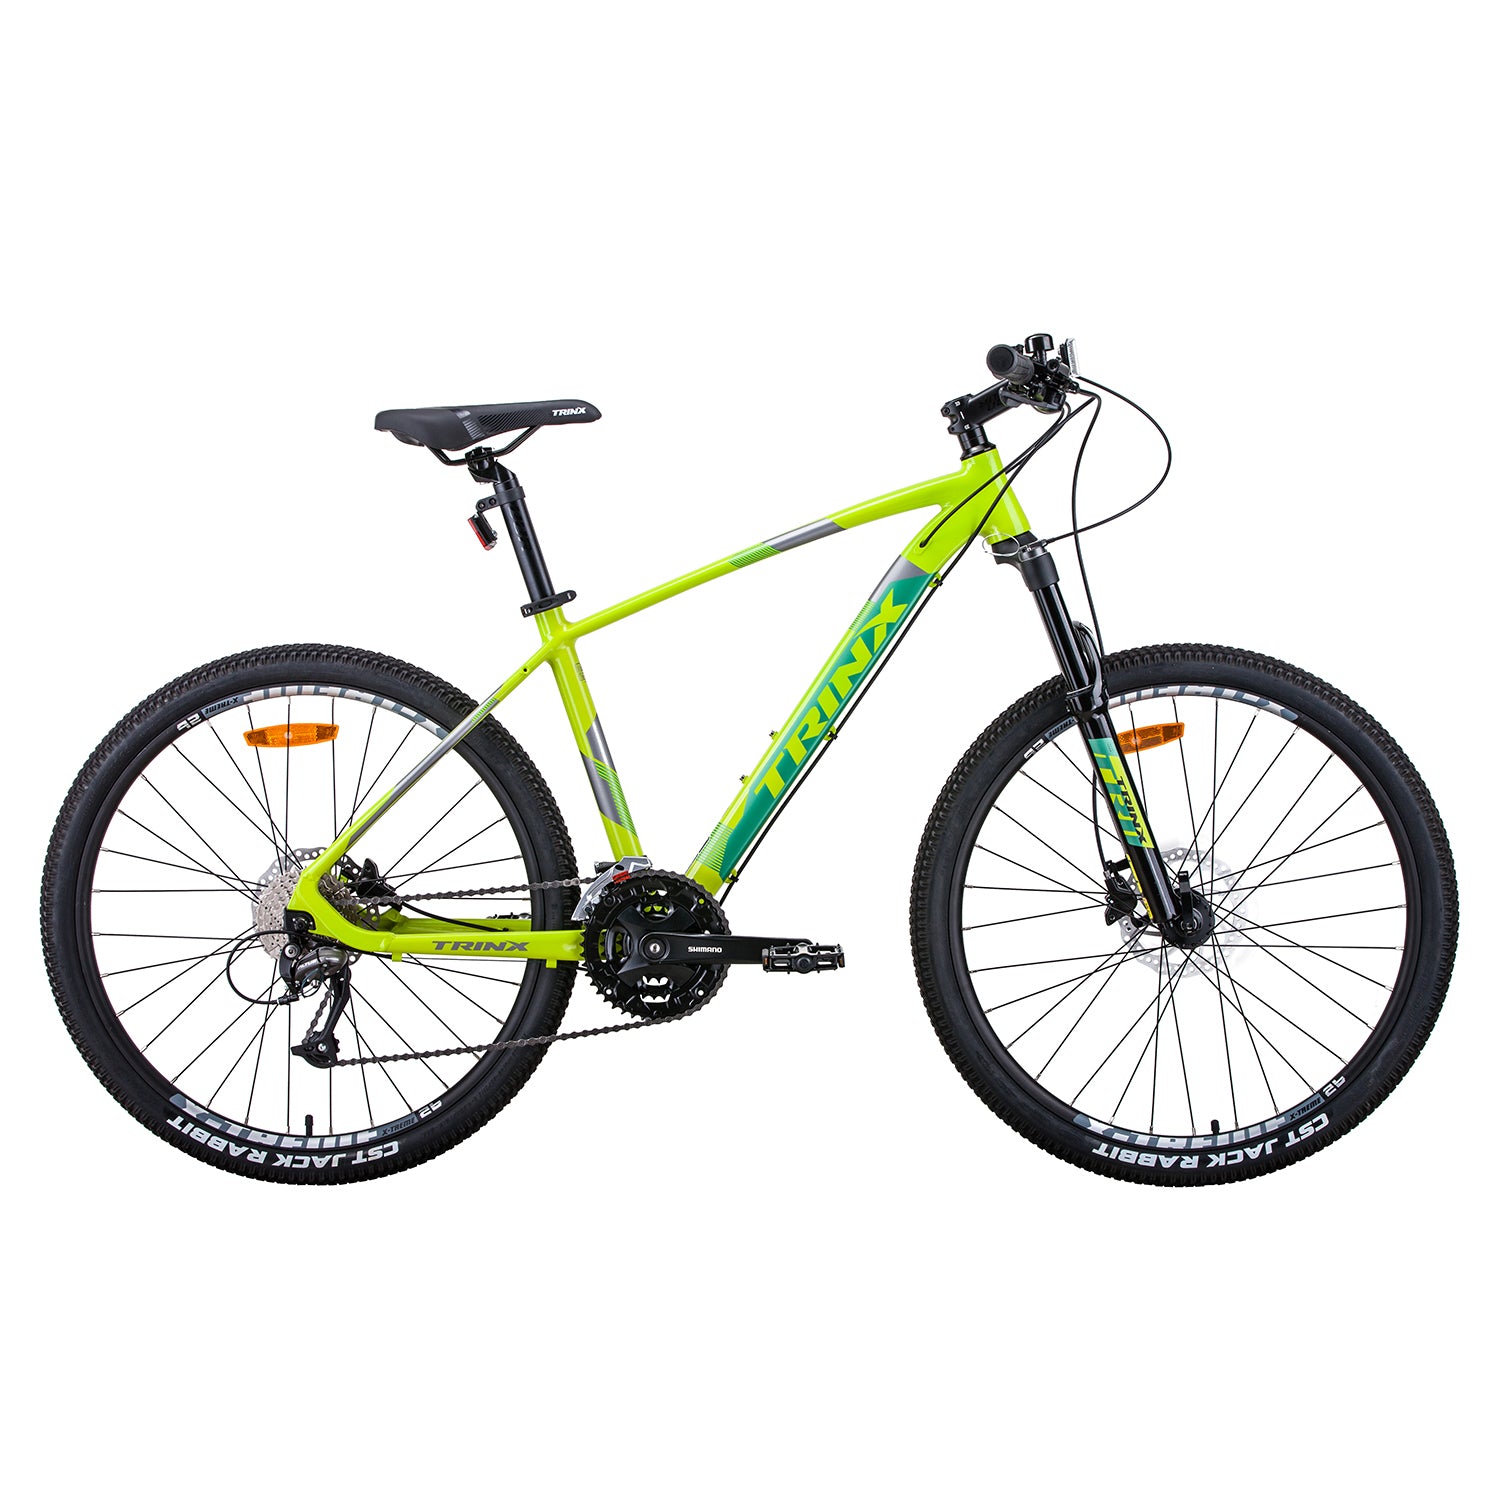 Trinx X1 MTB Mountain Bike Shimano Altus M370 27 Speed 19 Inches Frame Yellow/Grey Green